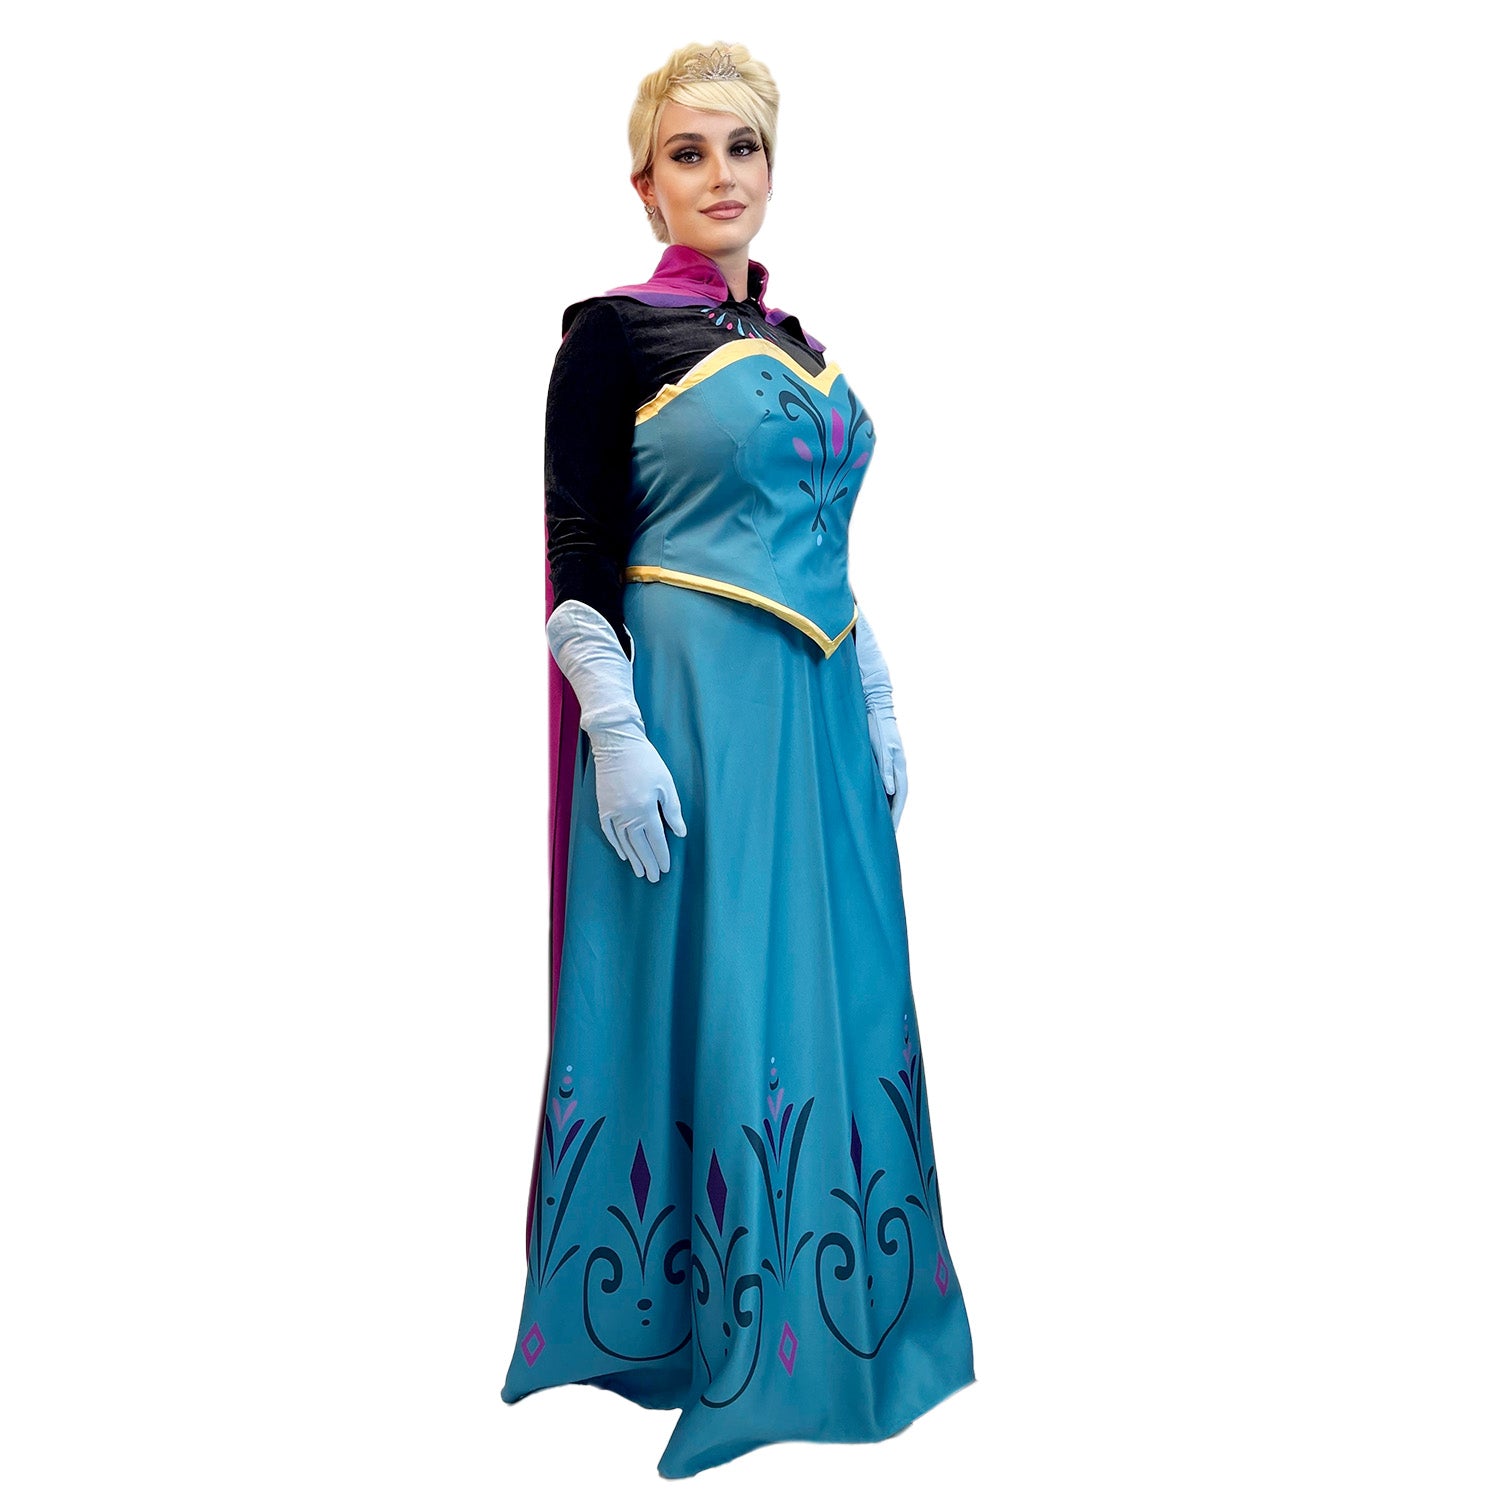 Frozen Princess Coronation Dress Adult Costume